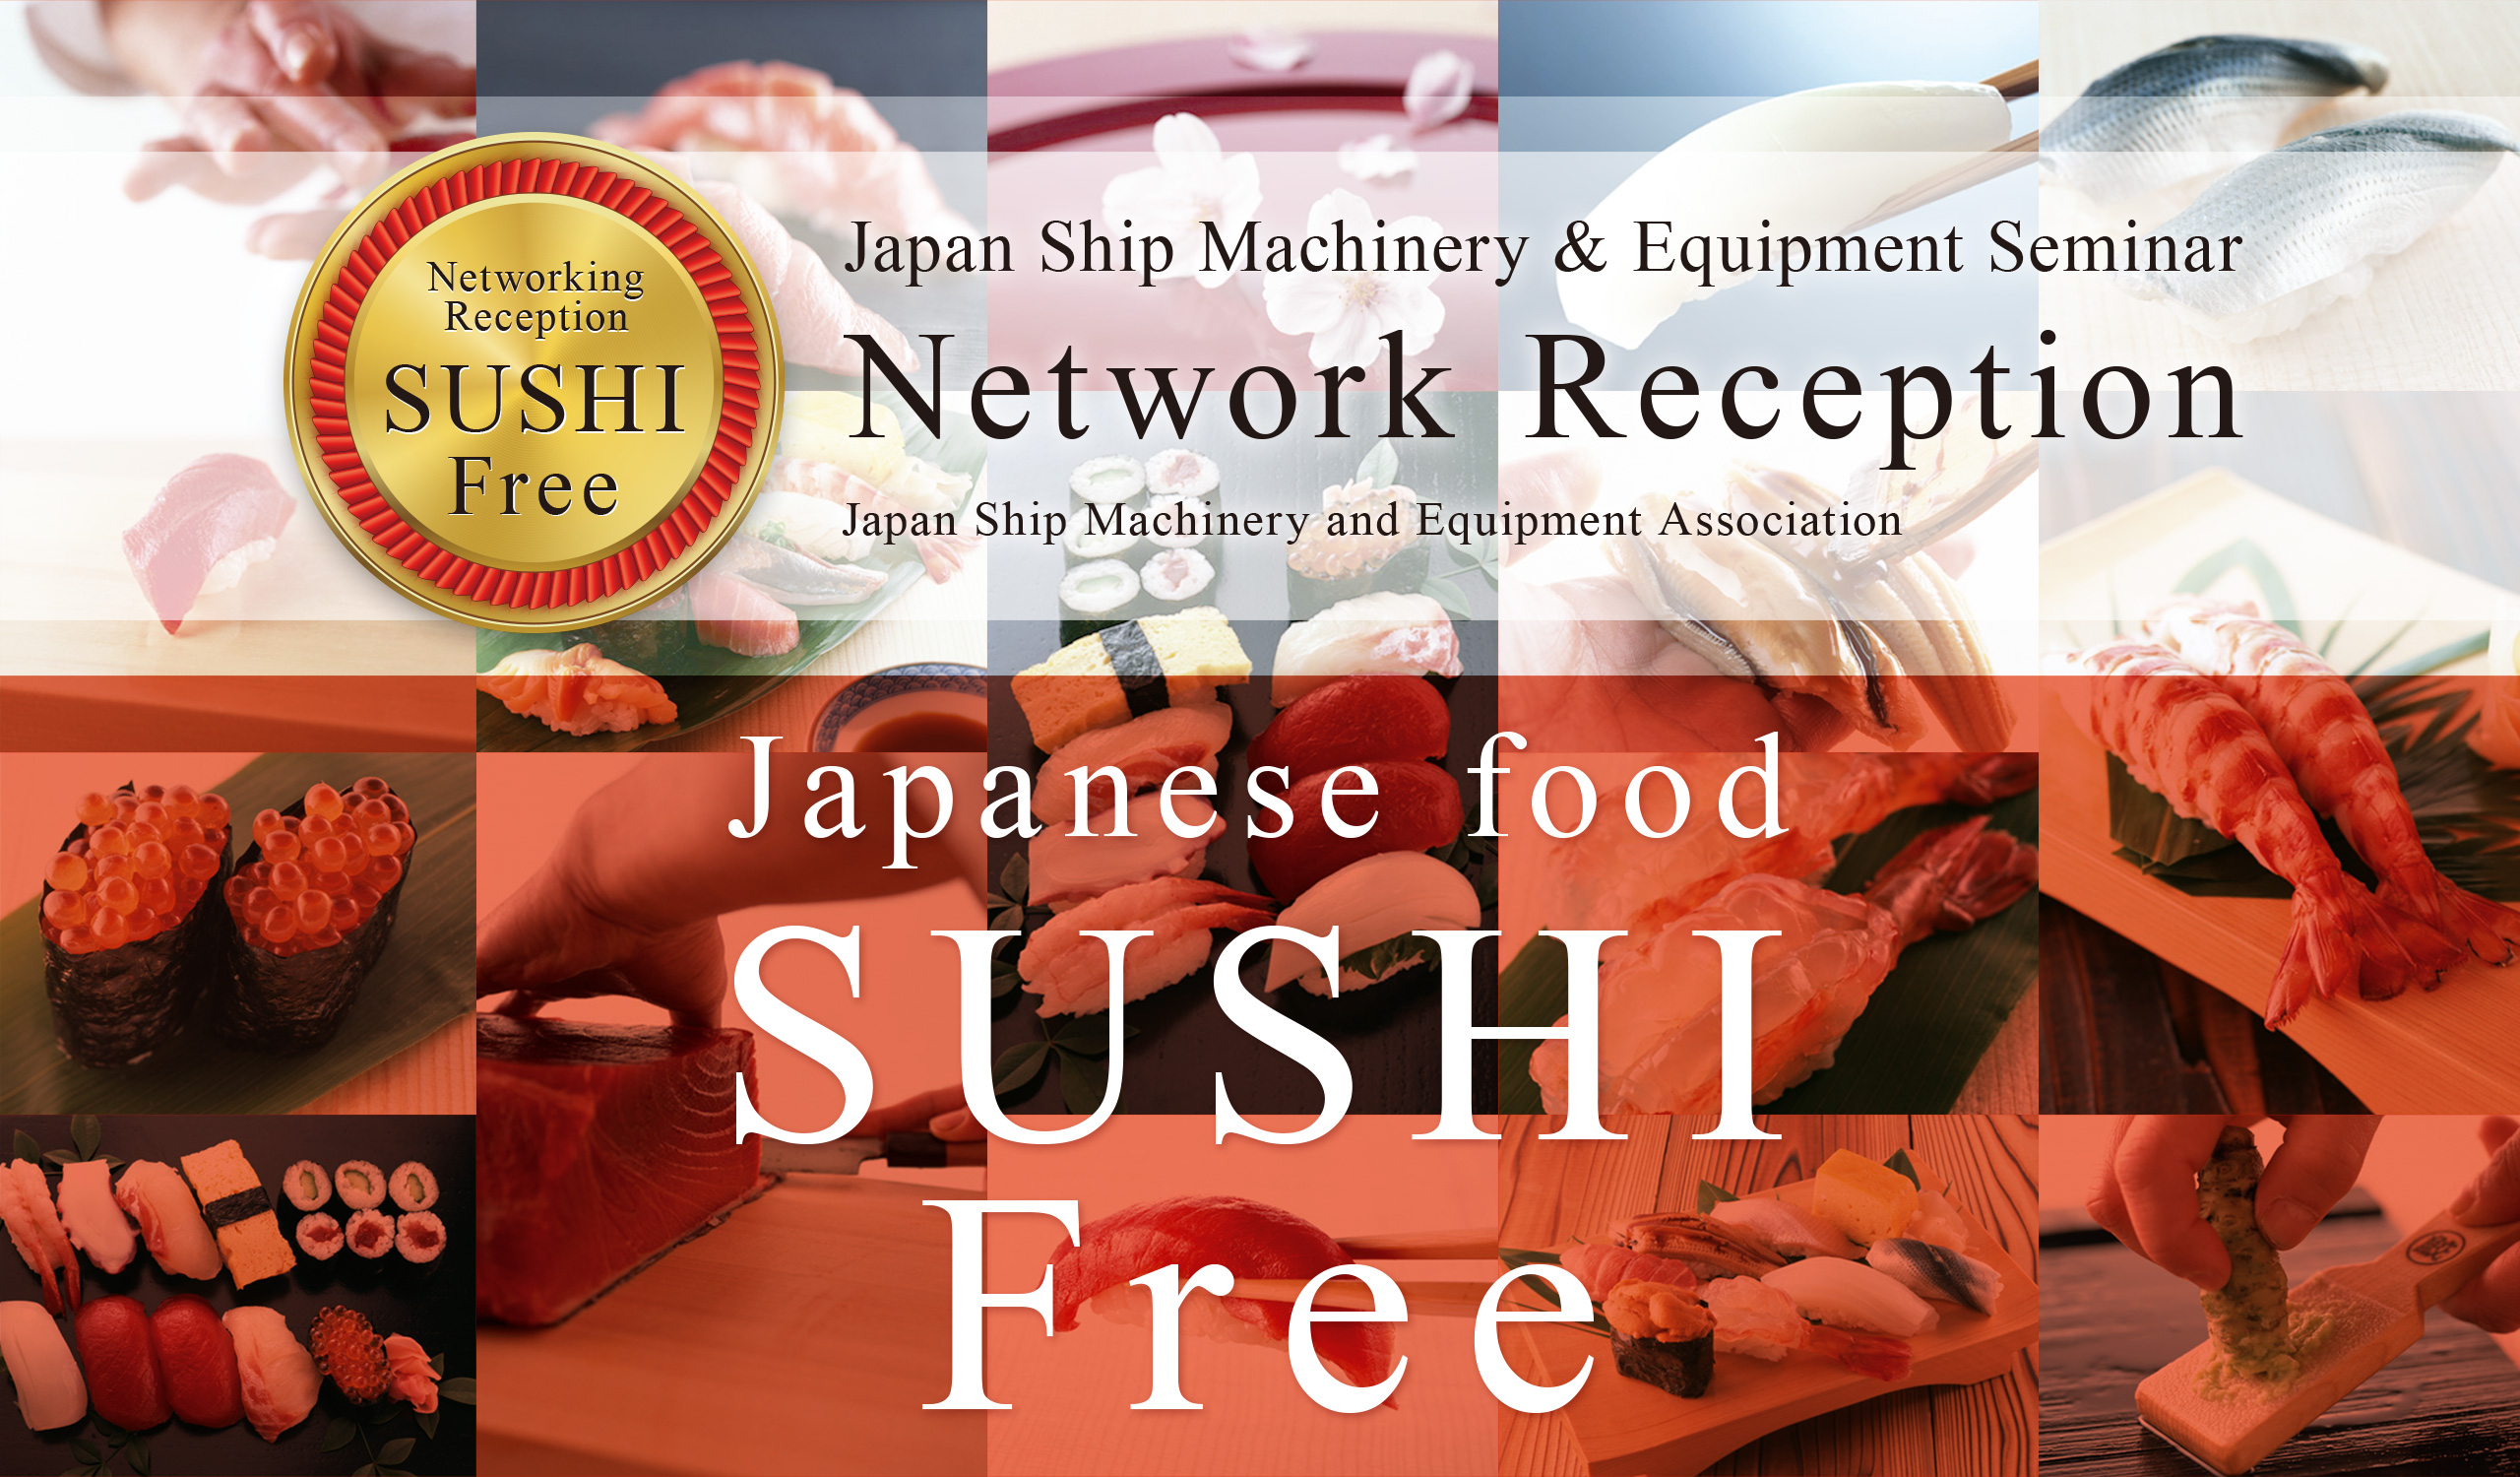 Network Reception Japanese food SUSHI Free